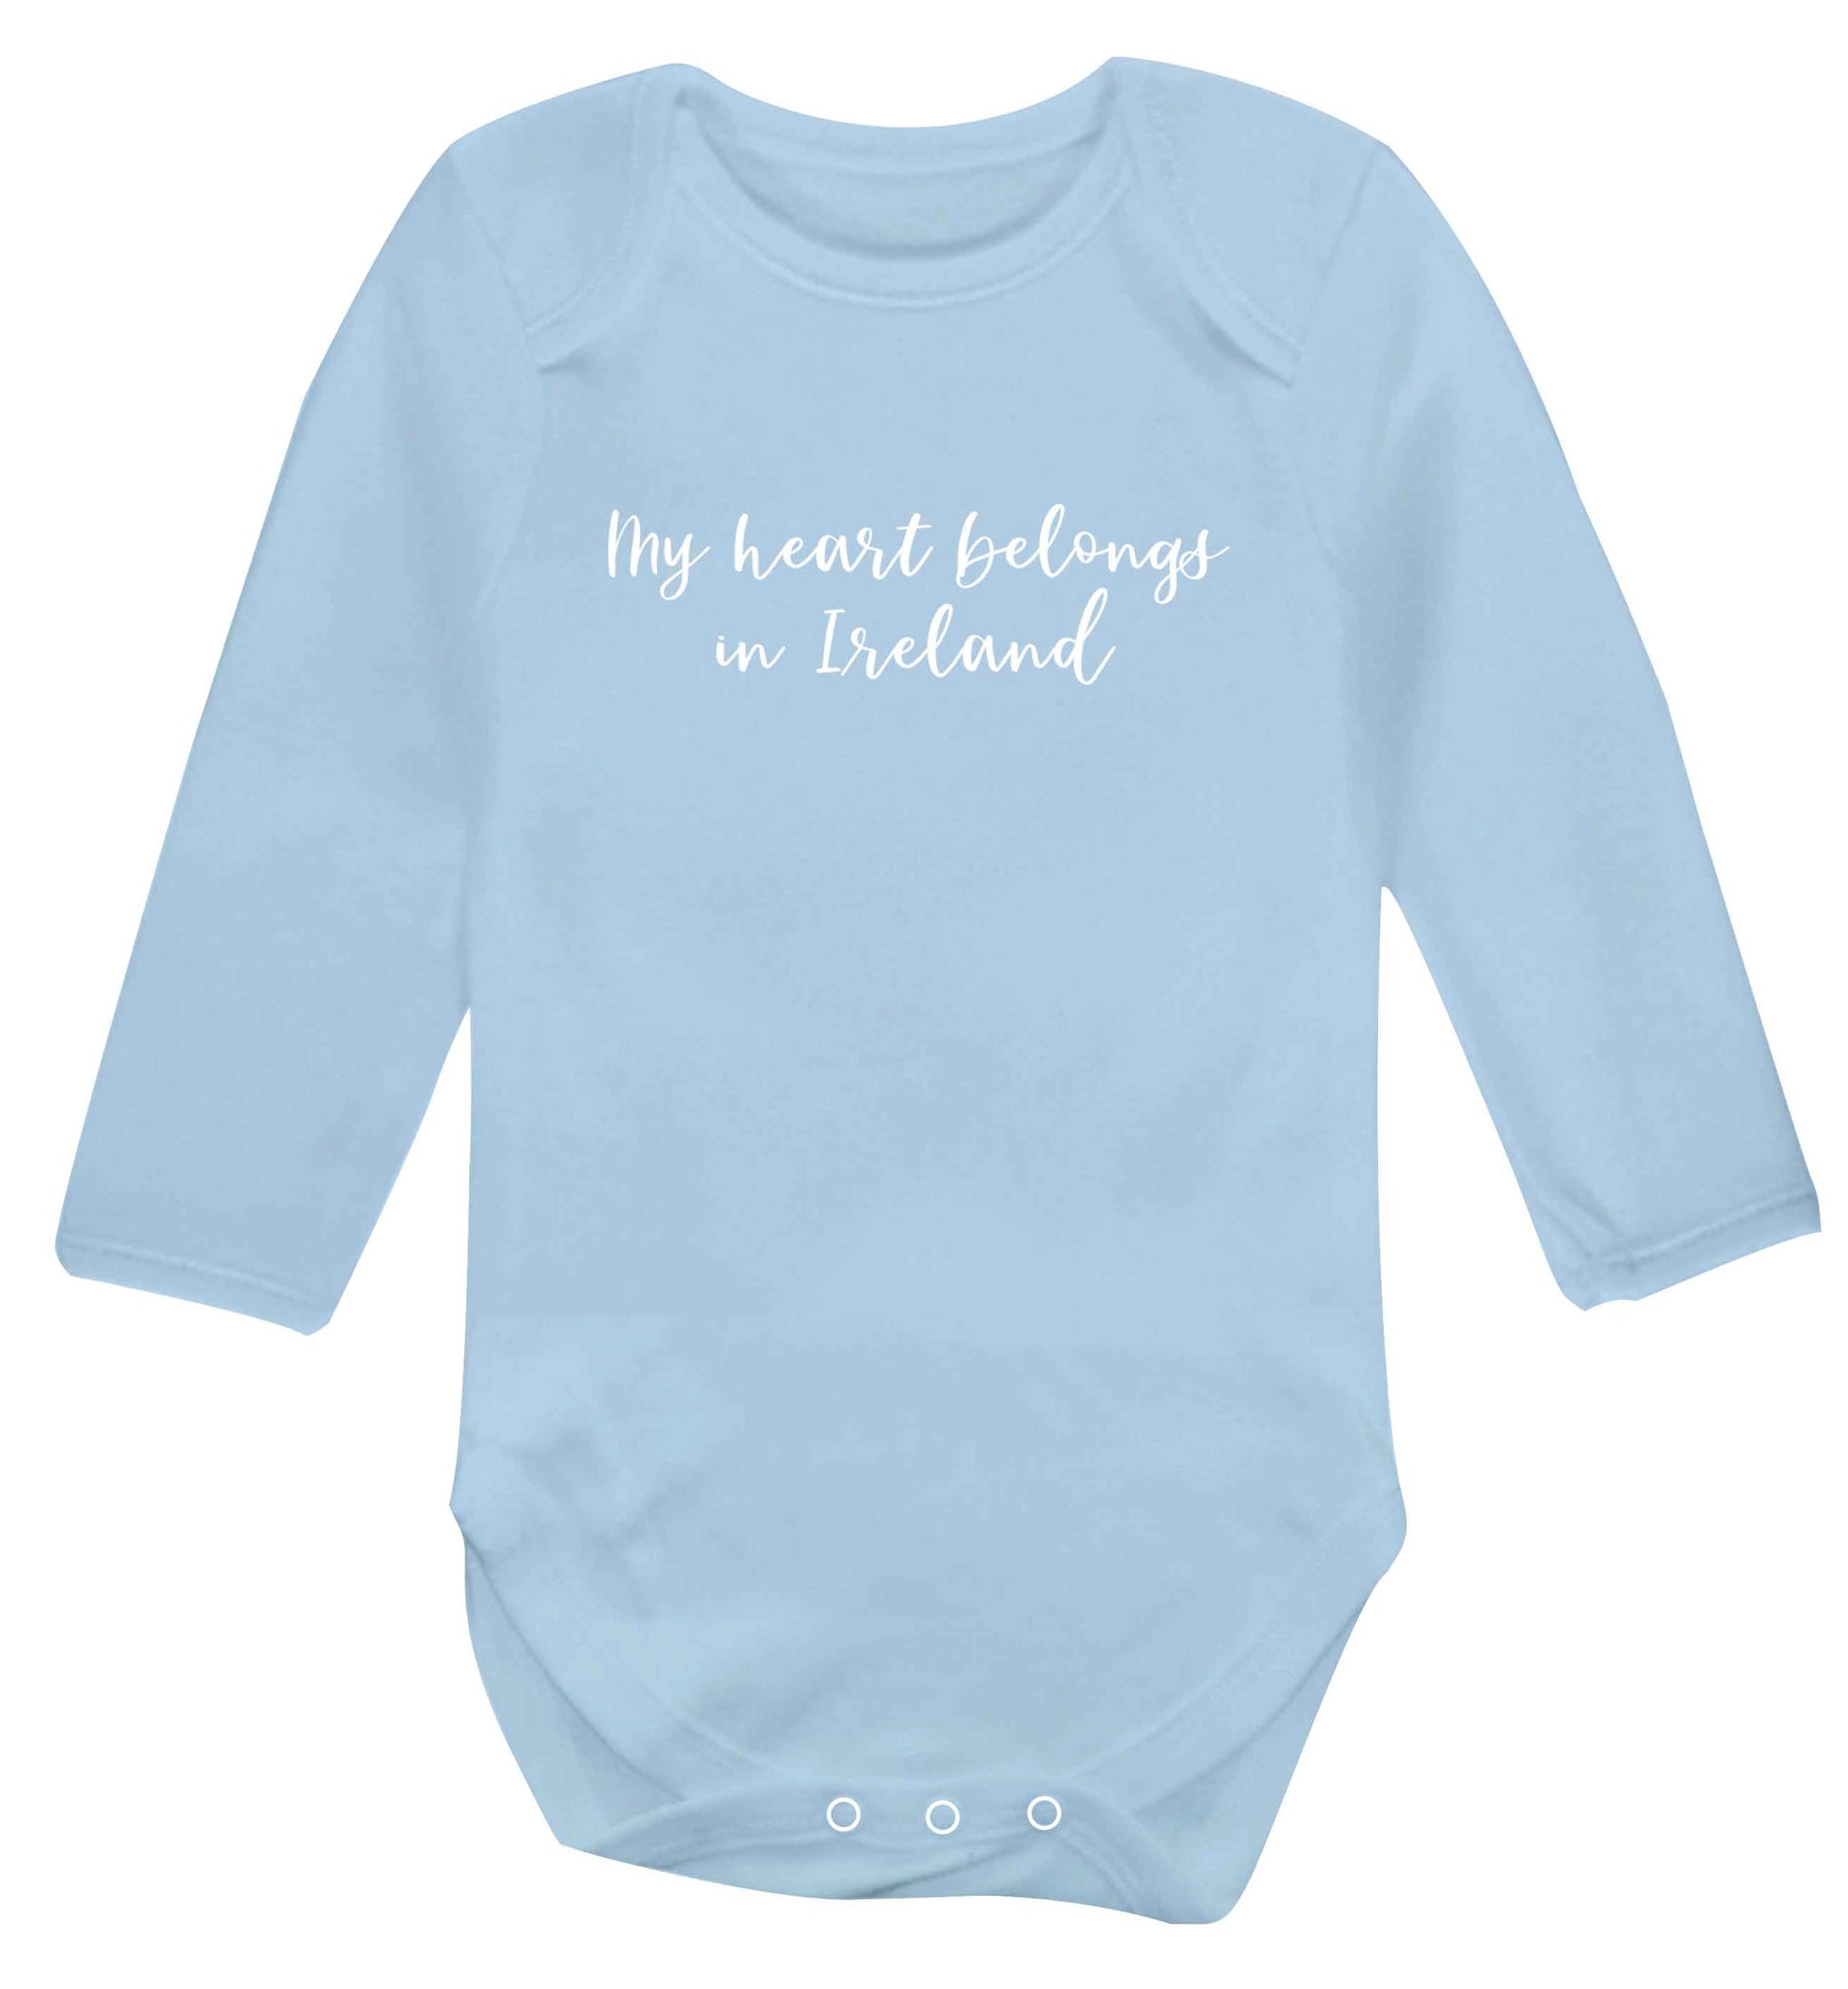 My heart belongs in Ireland baby vest long sleeved pale blue 6-12 months